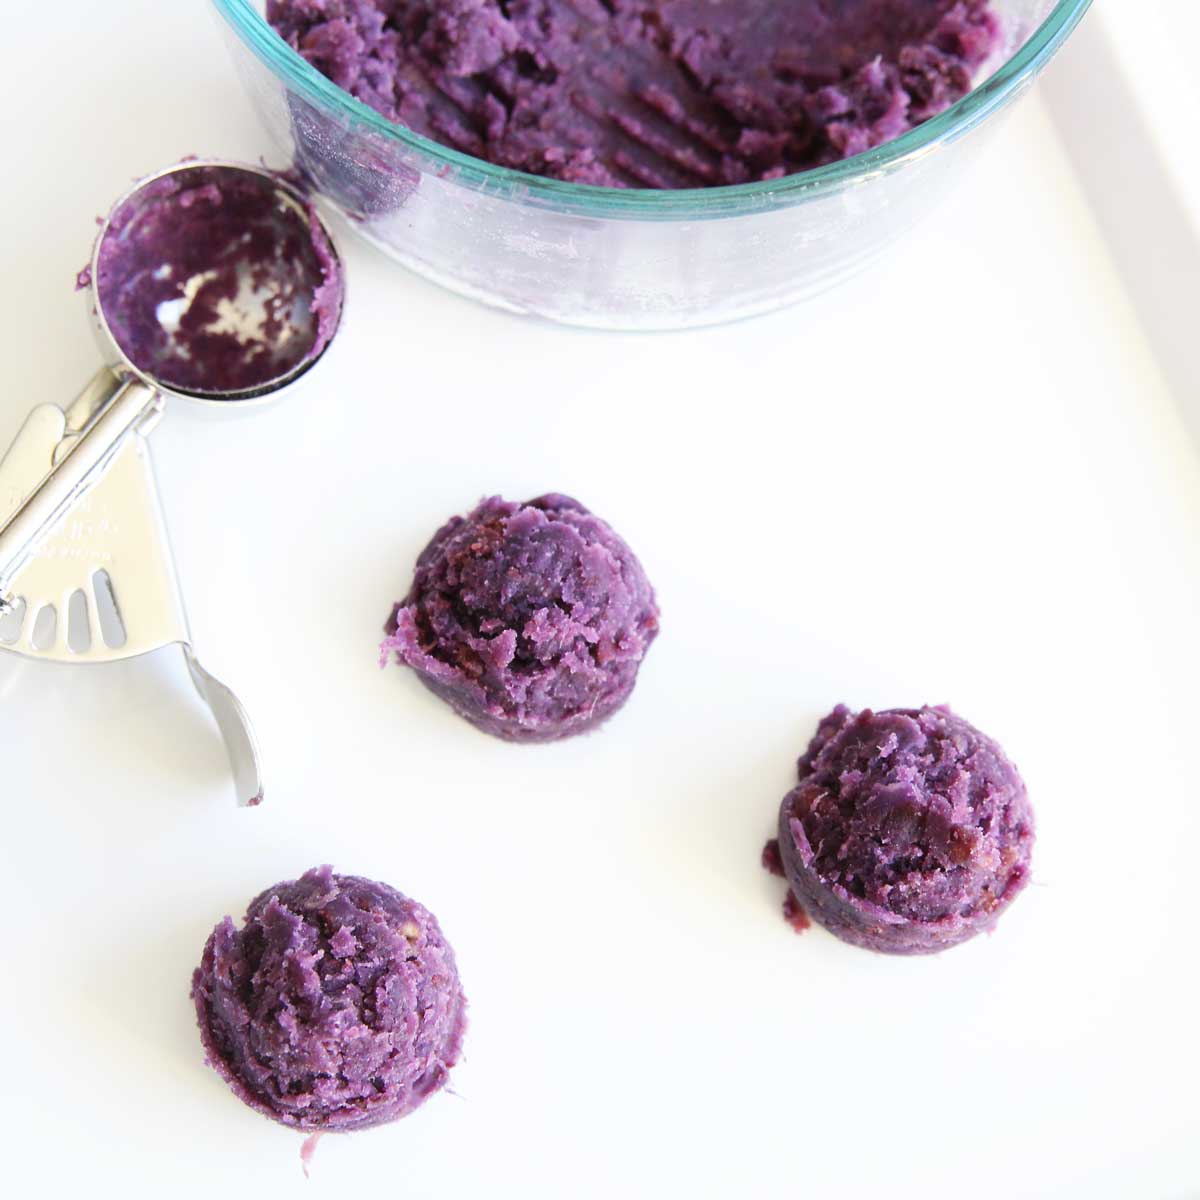 filling - purple sweet potato paste